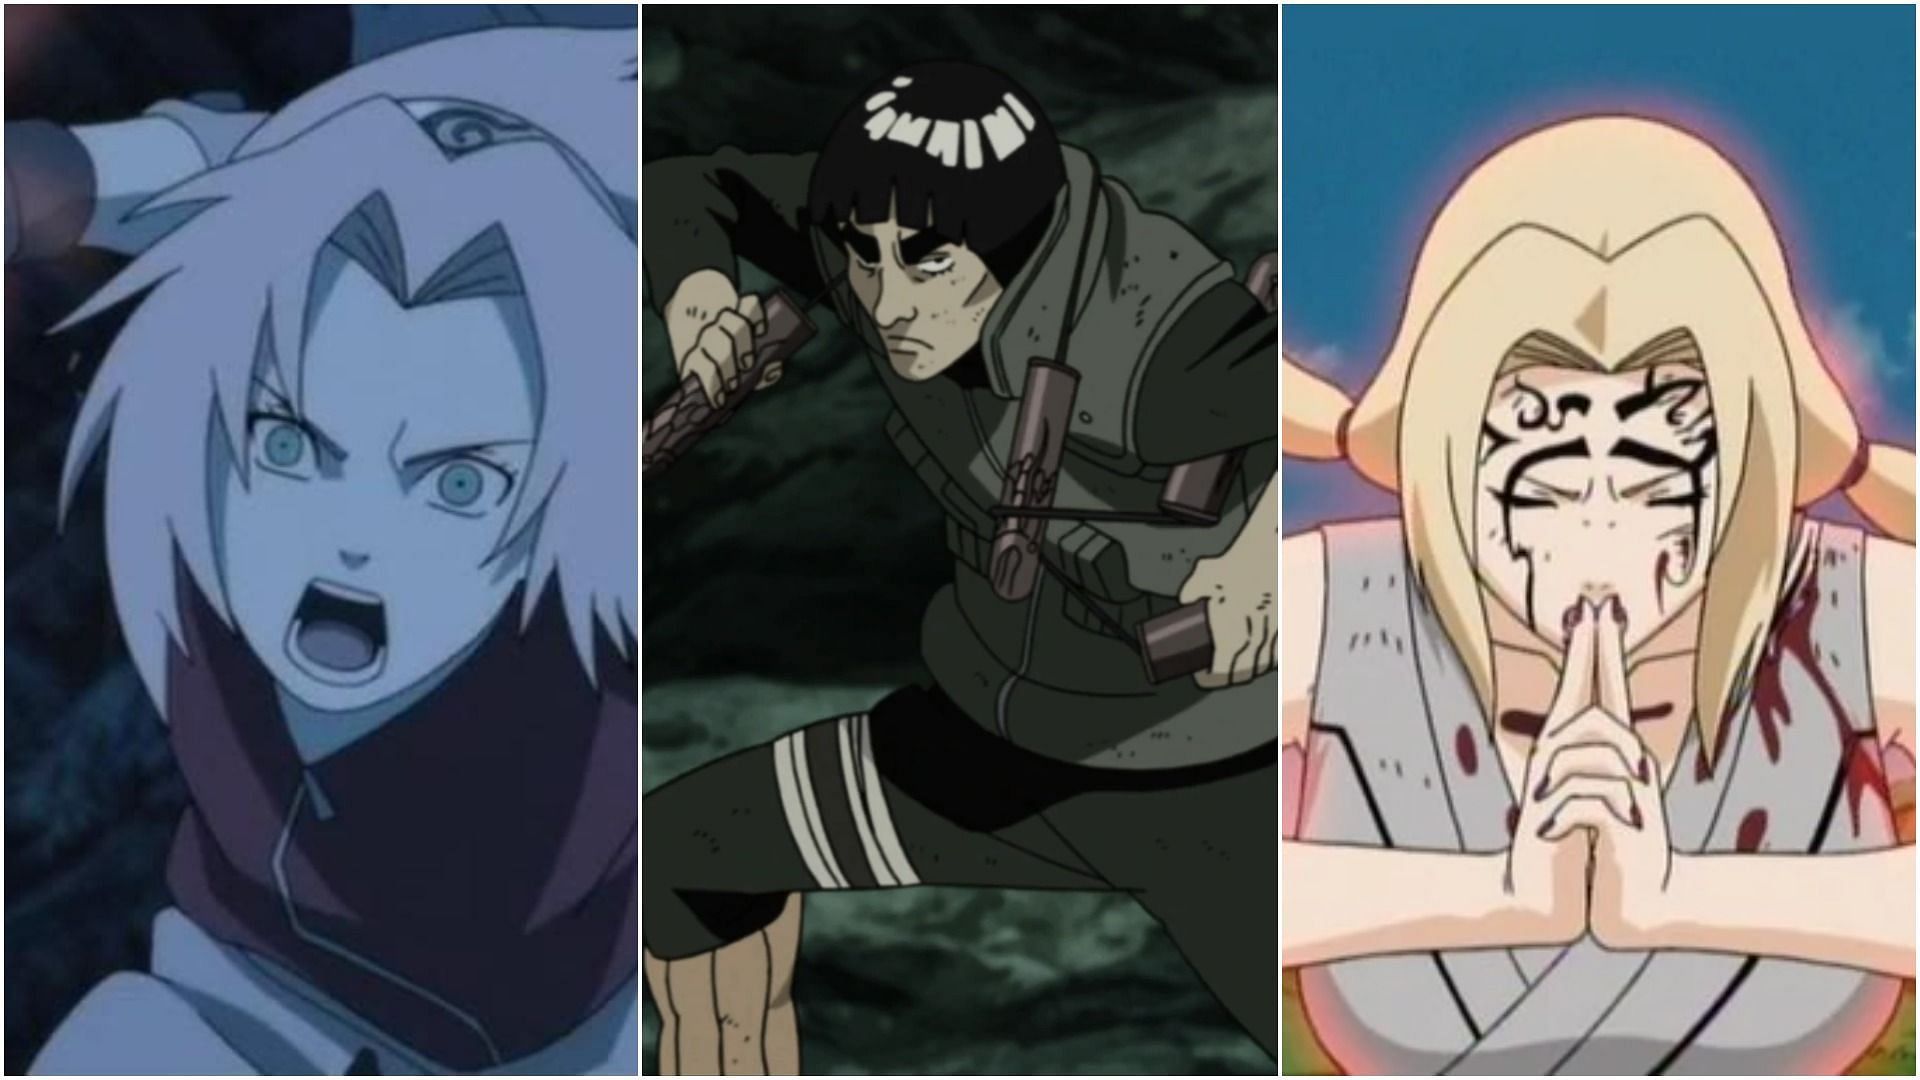 Sakura, Guy, and Tsunade as seen in Naruto (Image via Sportskeeda)